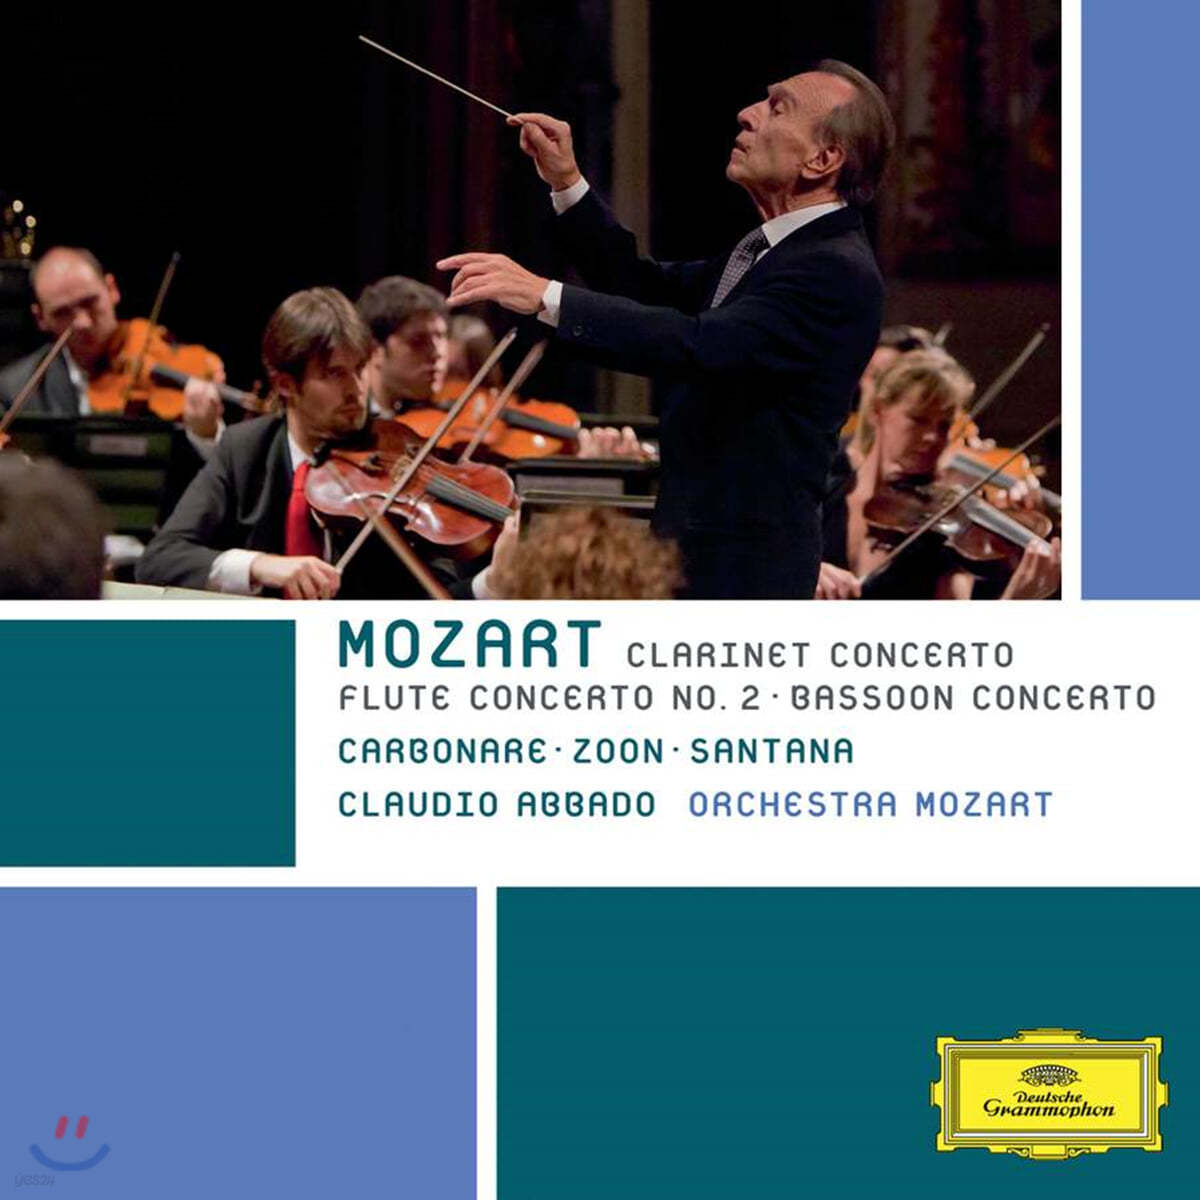 Claudio Abbado 모차르트: 클라리넷 협주곡, 바순 협주곡, 플루트 협주곡 (Mozart: Clarinet Concerto, Bassoon Concerto, Flute Concerto)